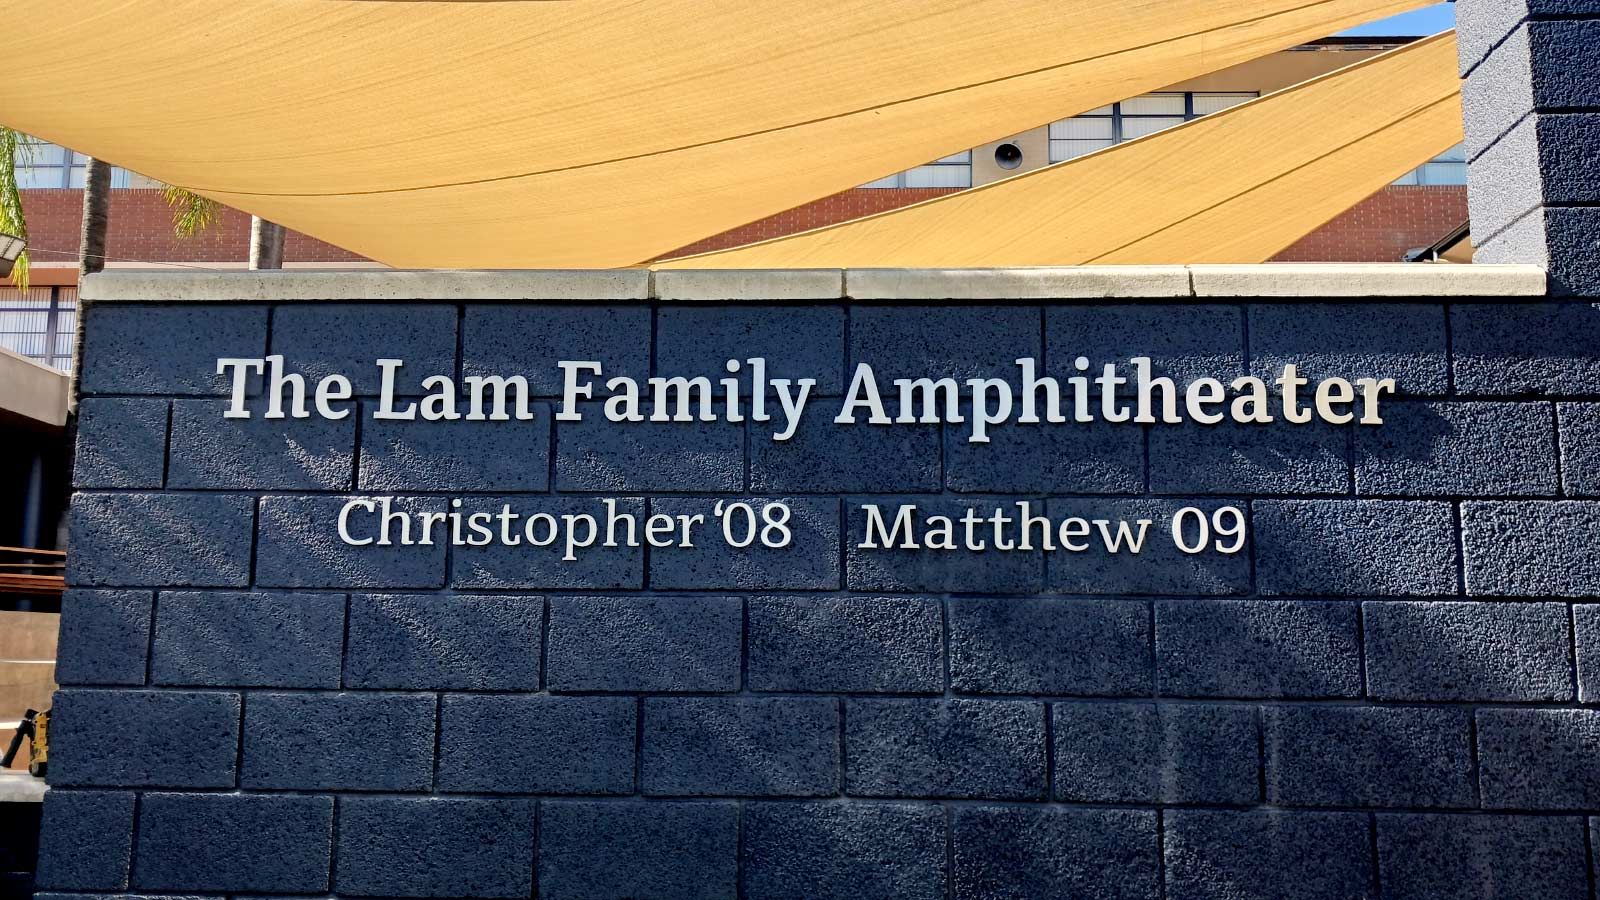 The Lam Family Amphitheater aluminum sign